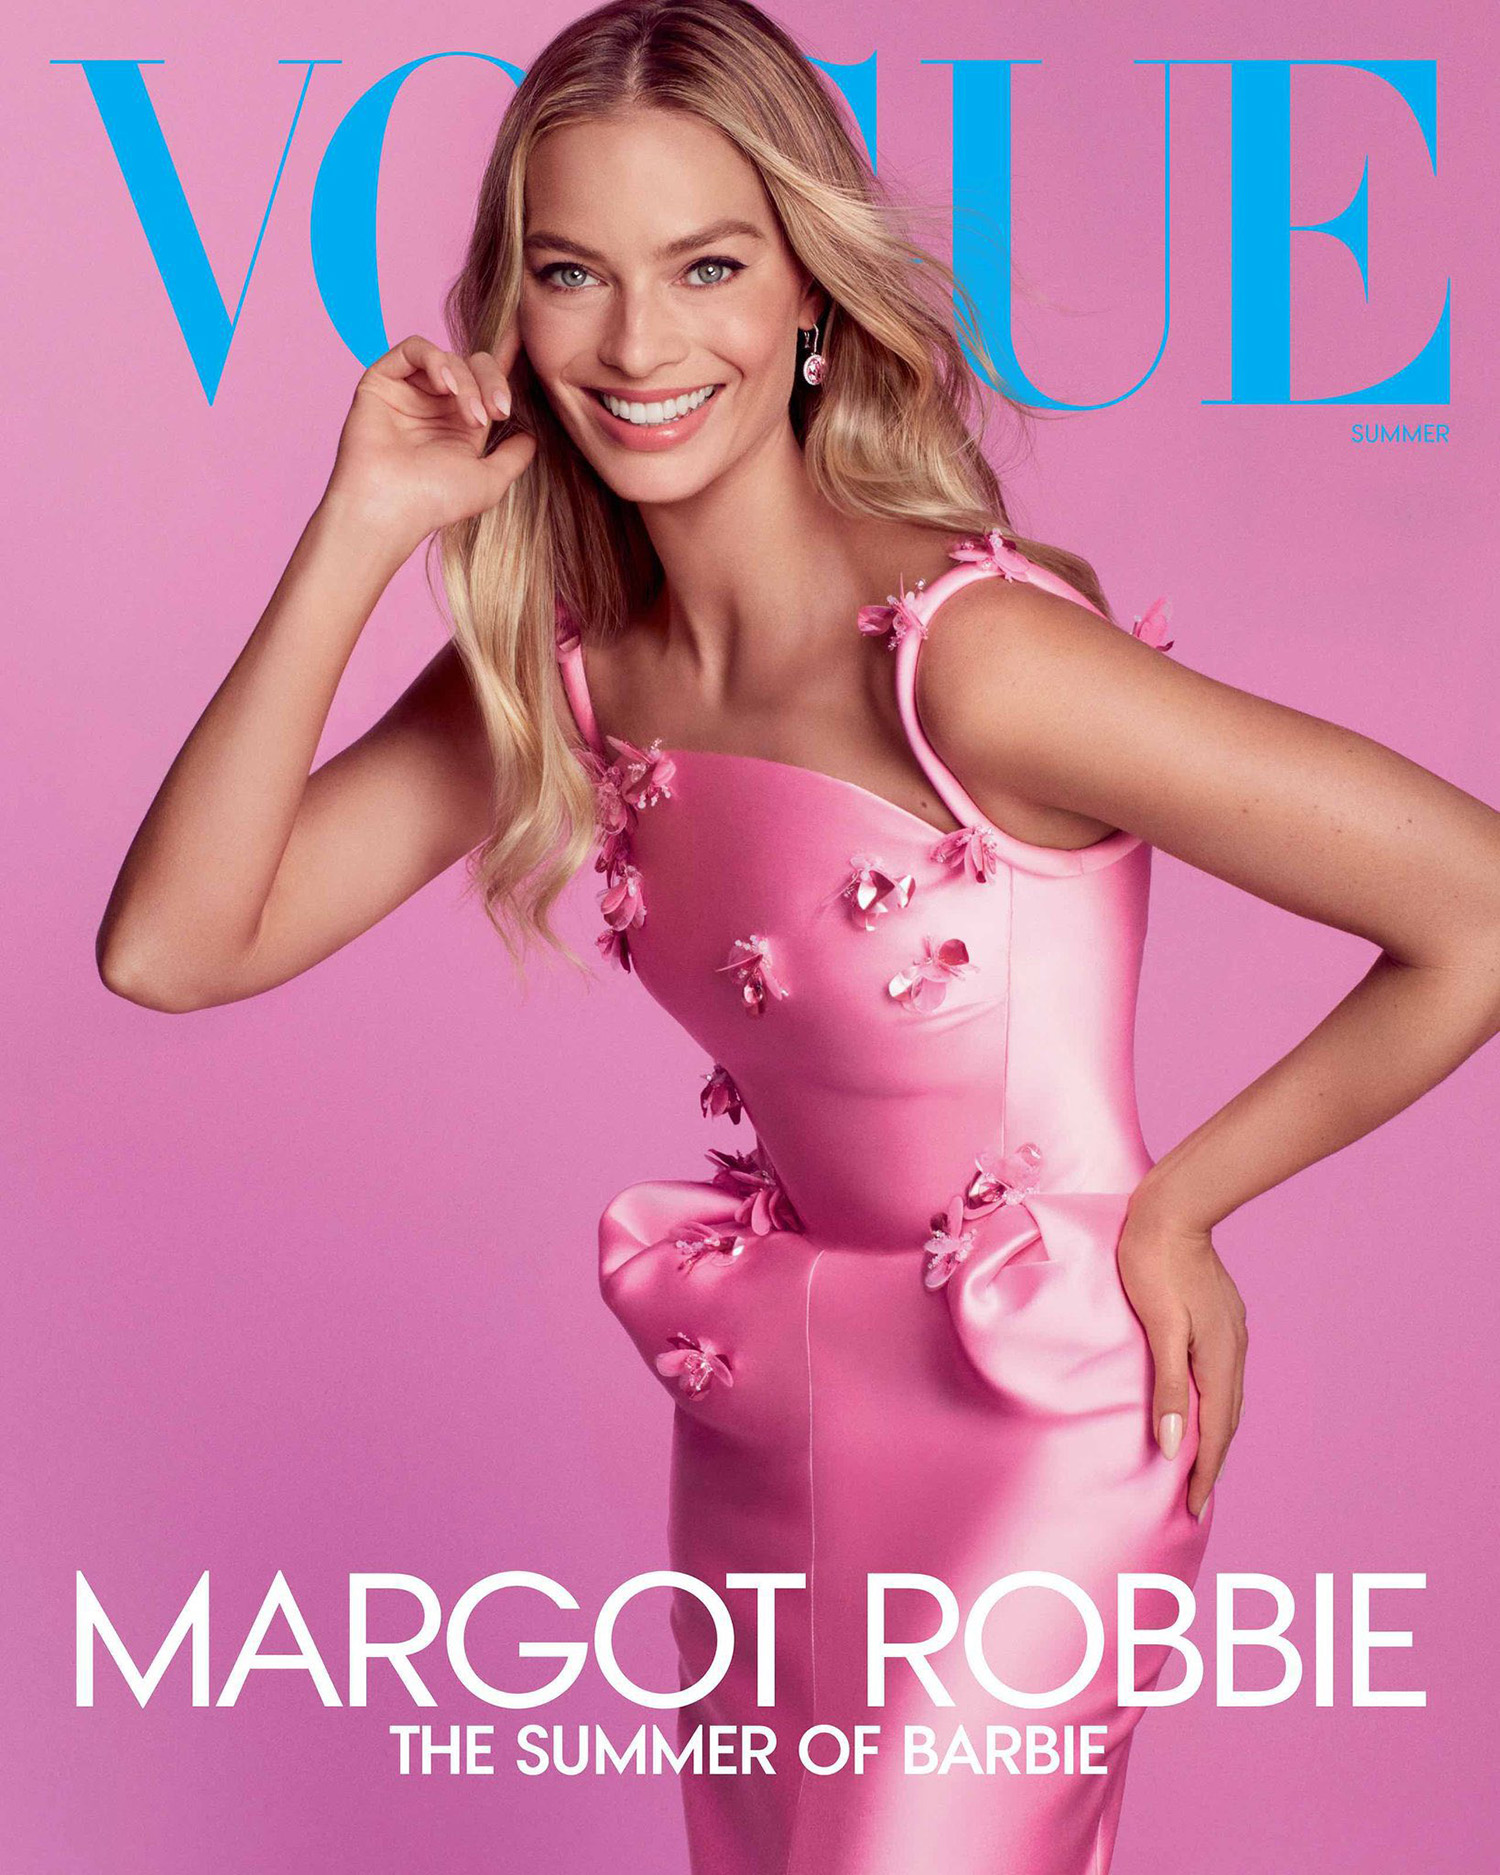  VOGUE MAGAZINE JULY 2019 MARGOT ROBBIE COVER: Vogue [US], Vogue  [US]: Libros